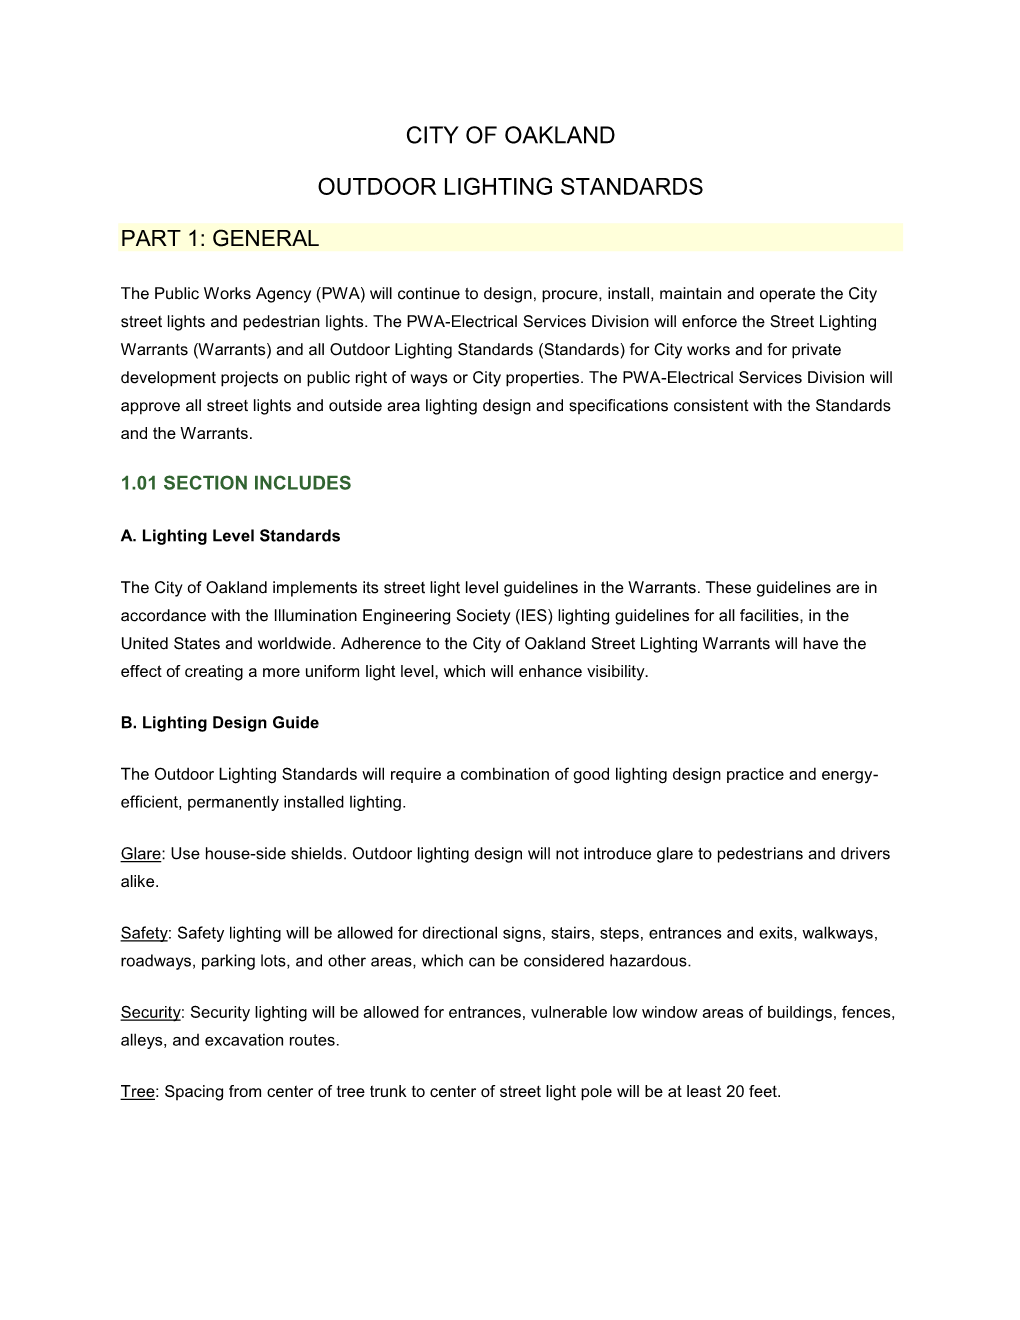 City of Oakland Outdoor Lighting Standards